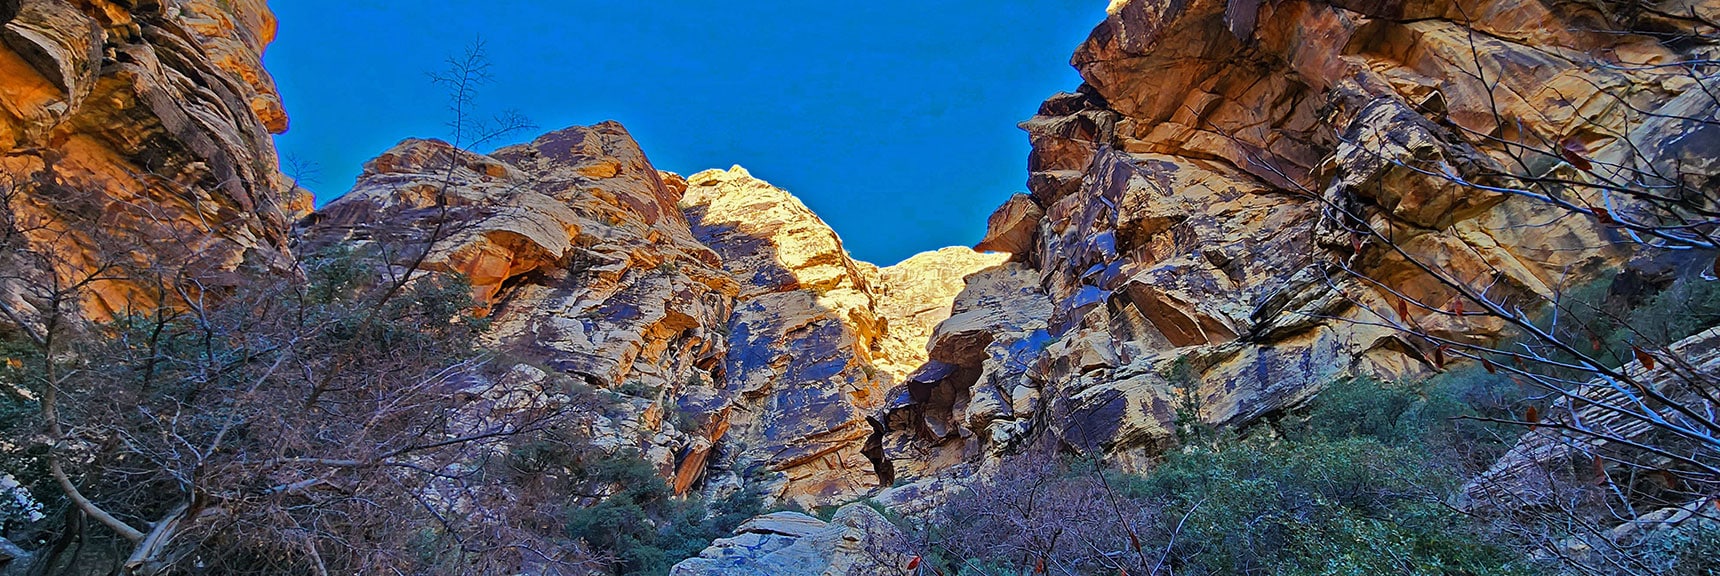 Continuing to Wind Upward Through the Canyon | Ice Box Canyon | Red Rock Canyon NCA, Nevada | Las Vegas Area Trails | David Smith